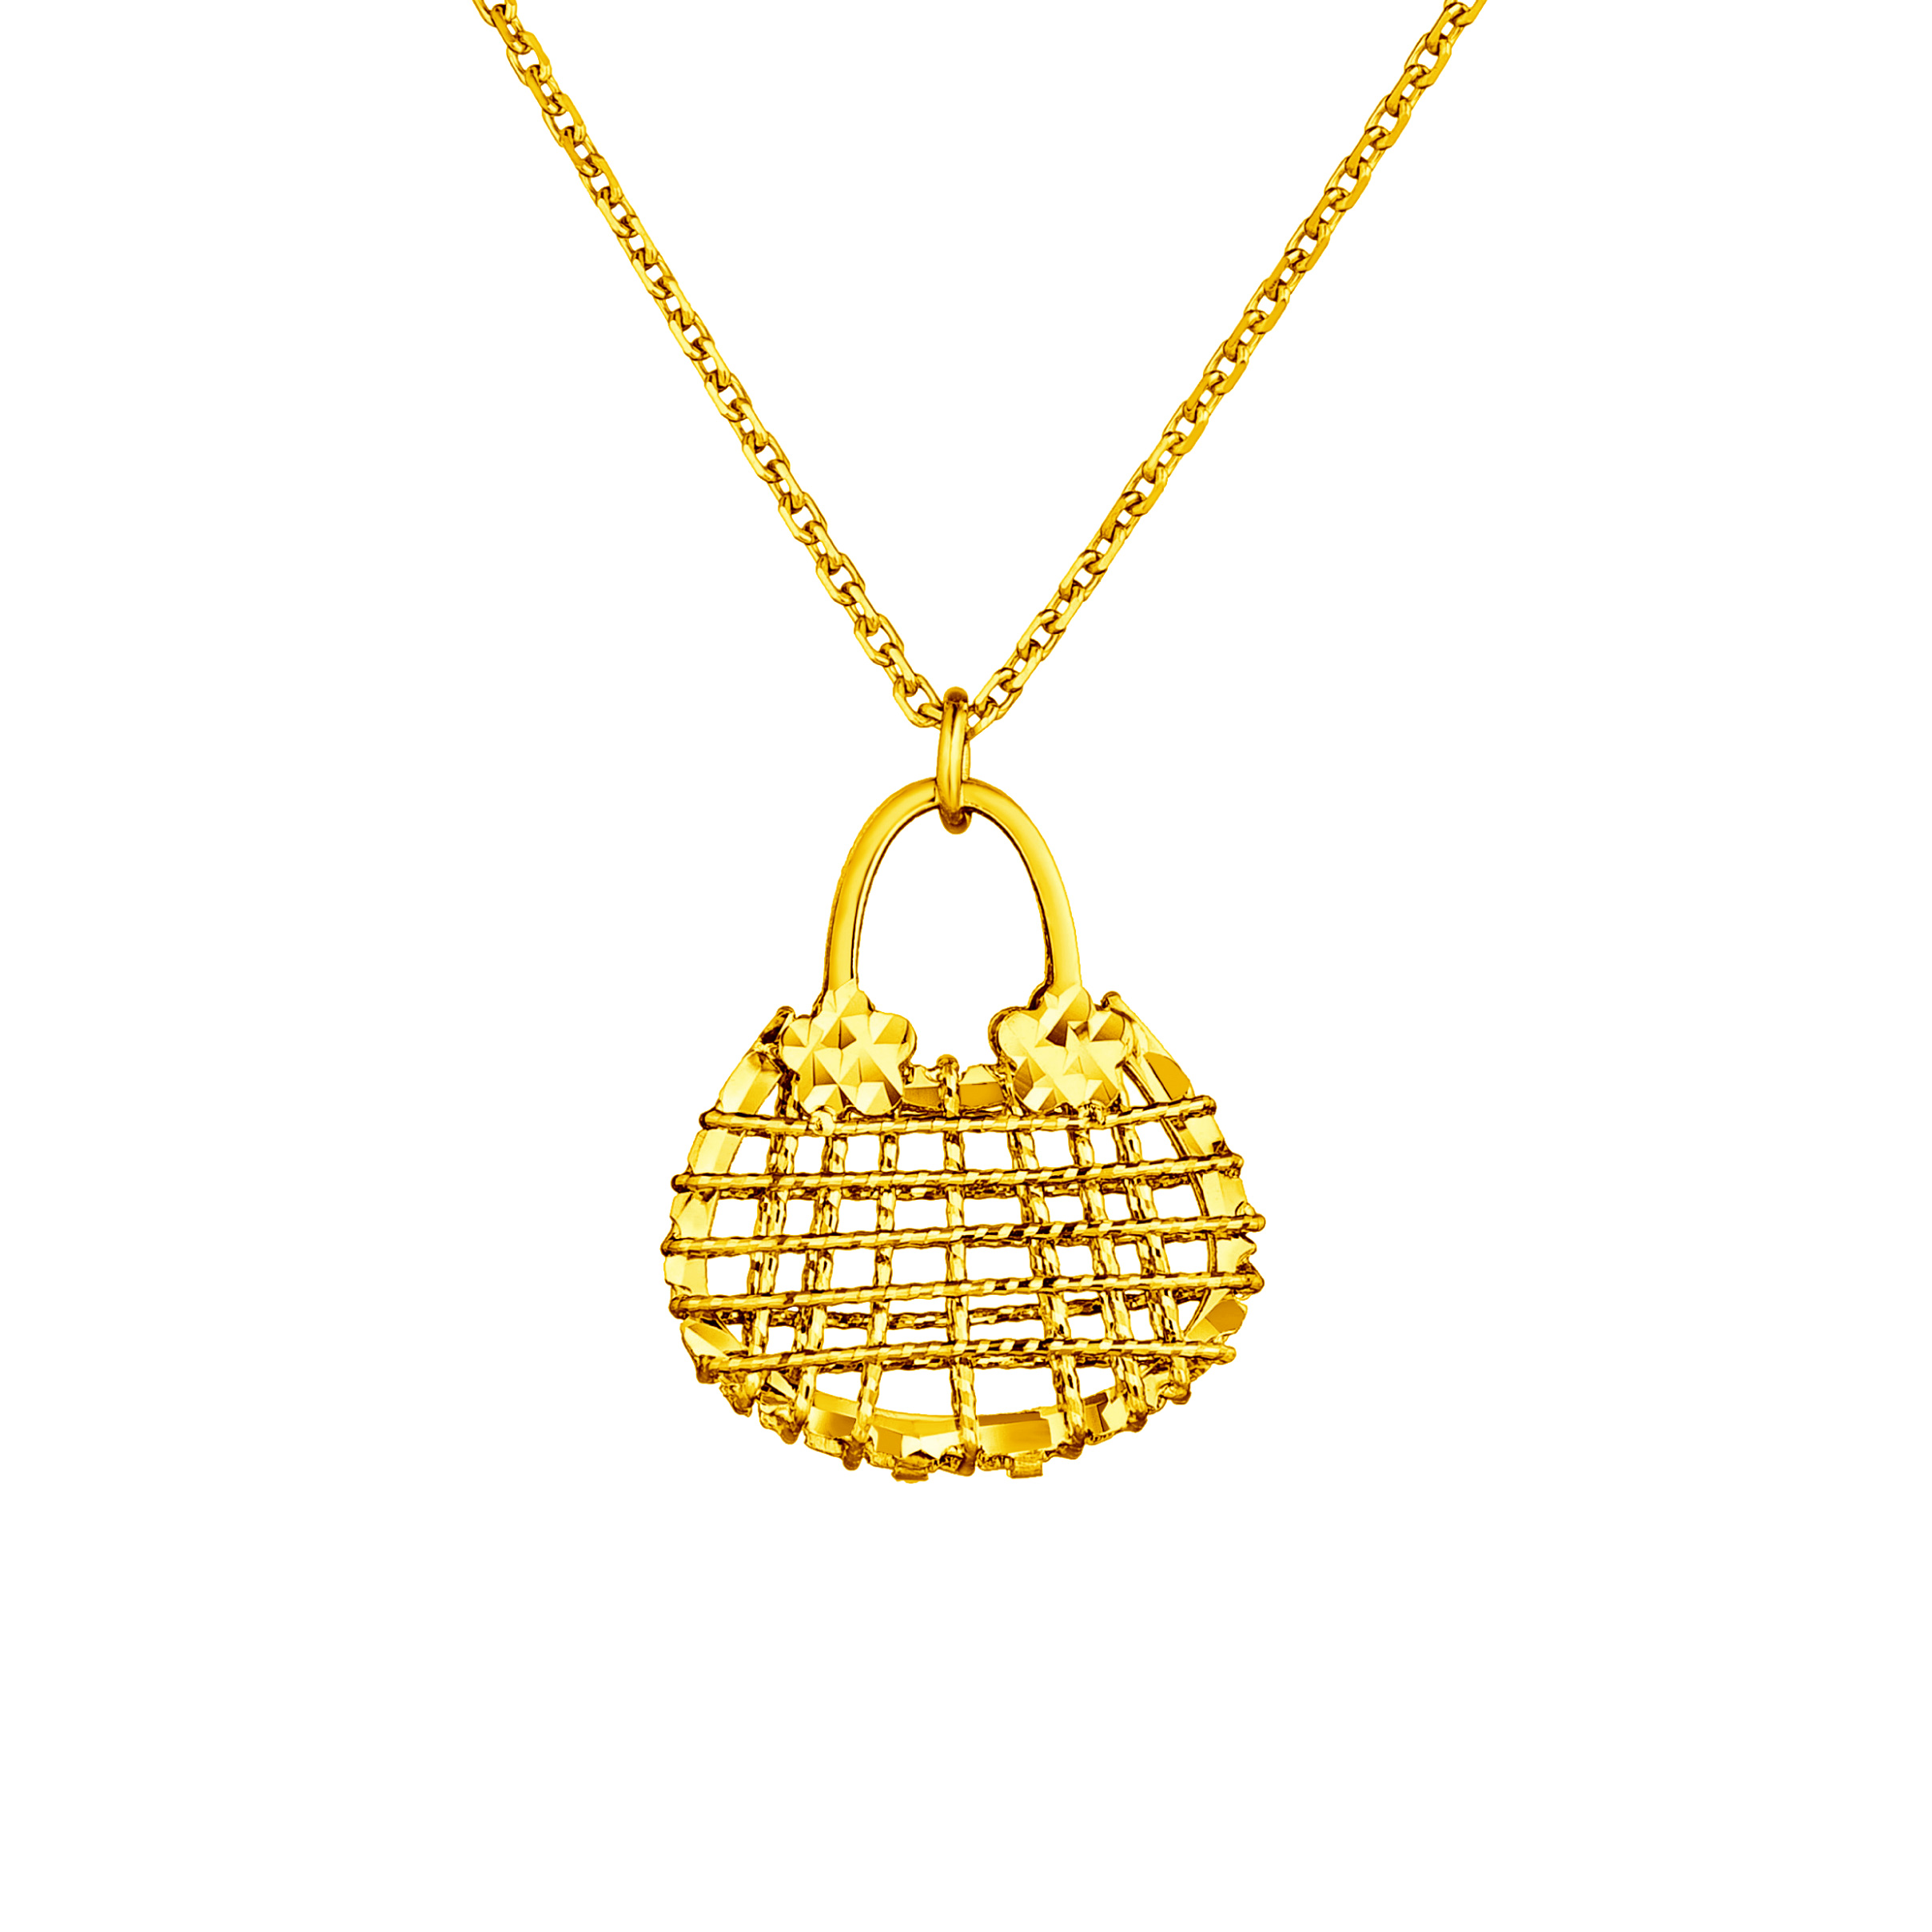 Goldstyle Fashion Handbag Necklace